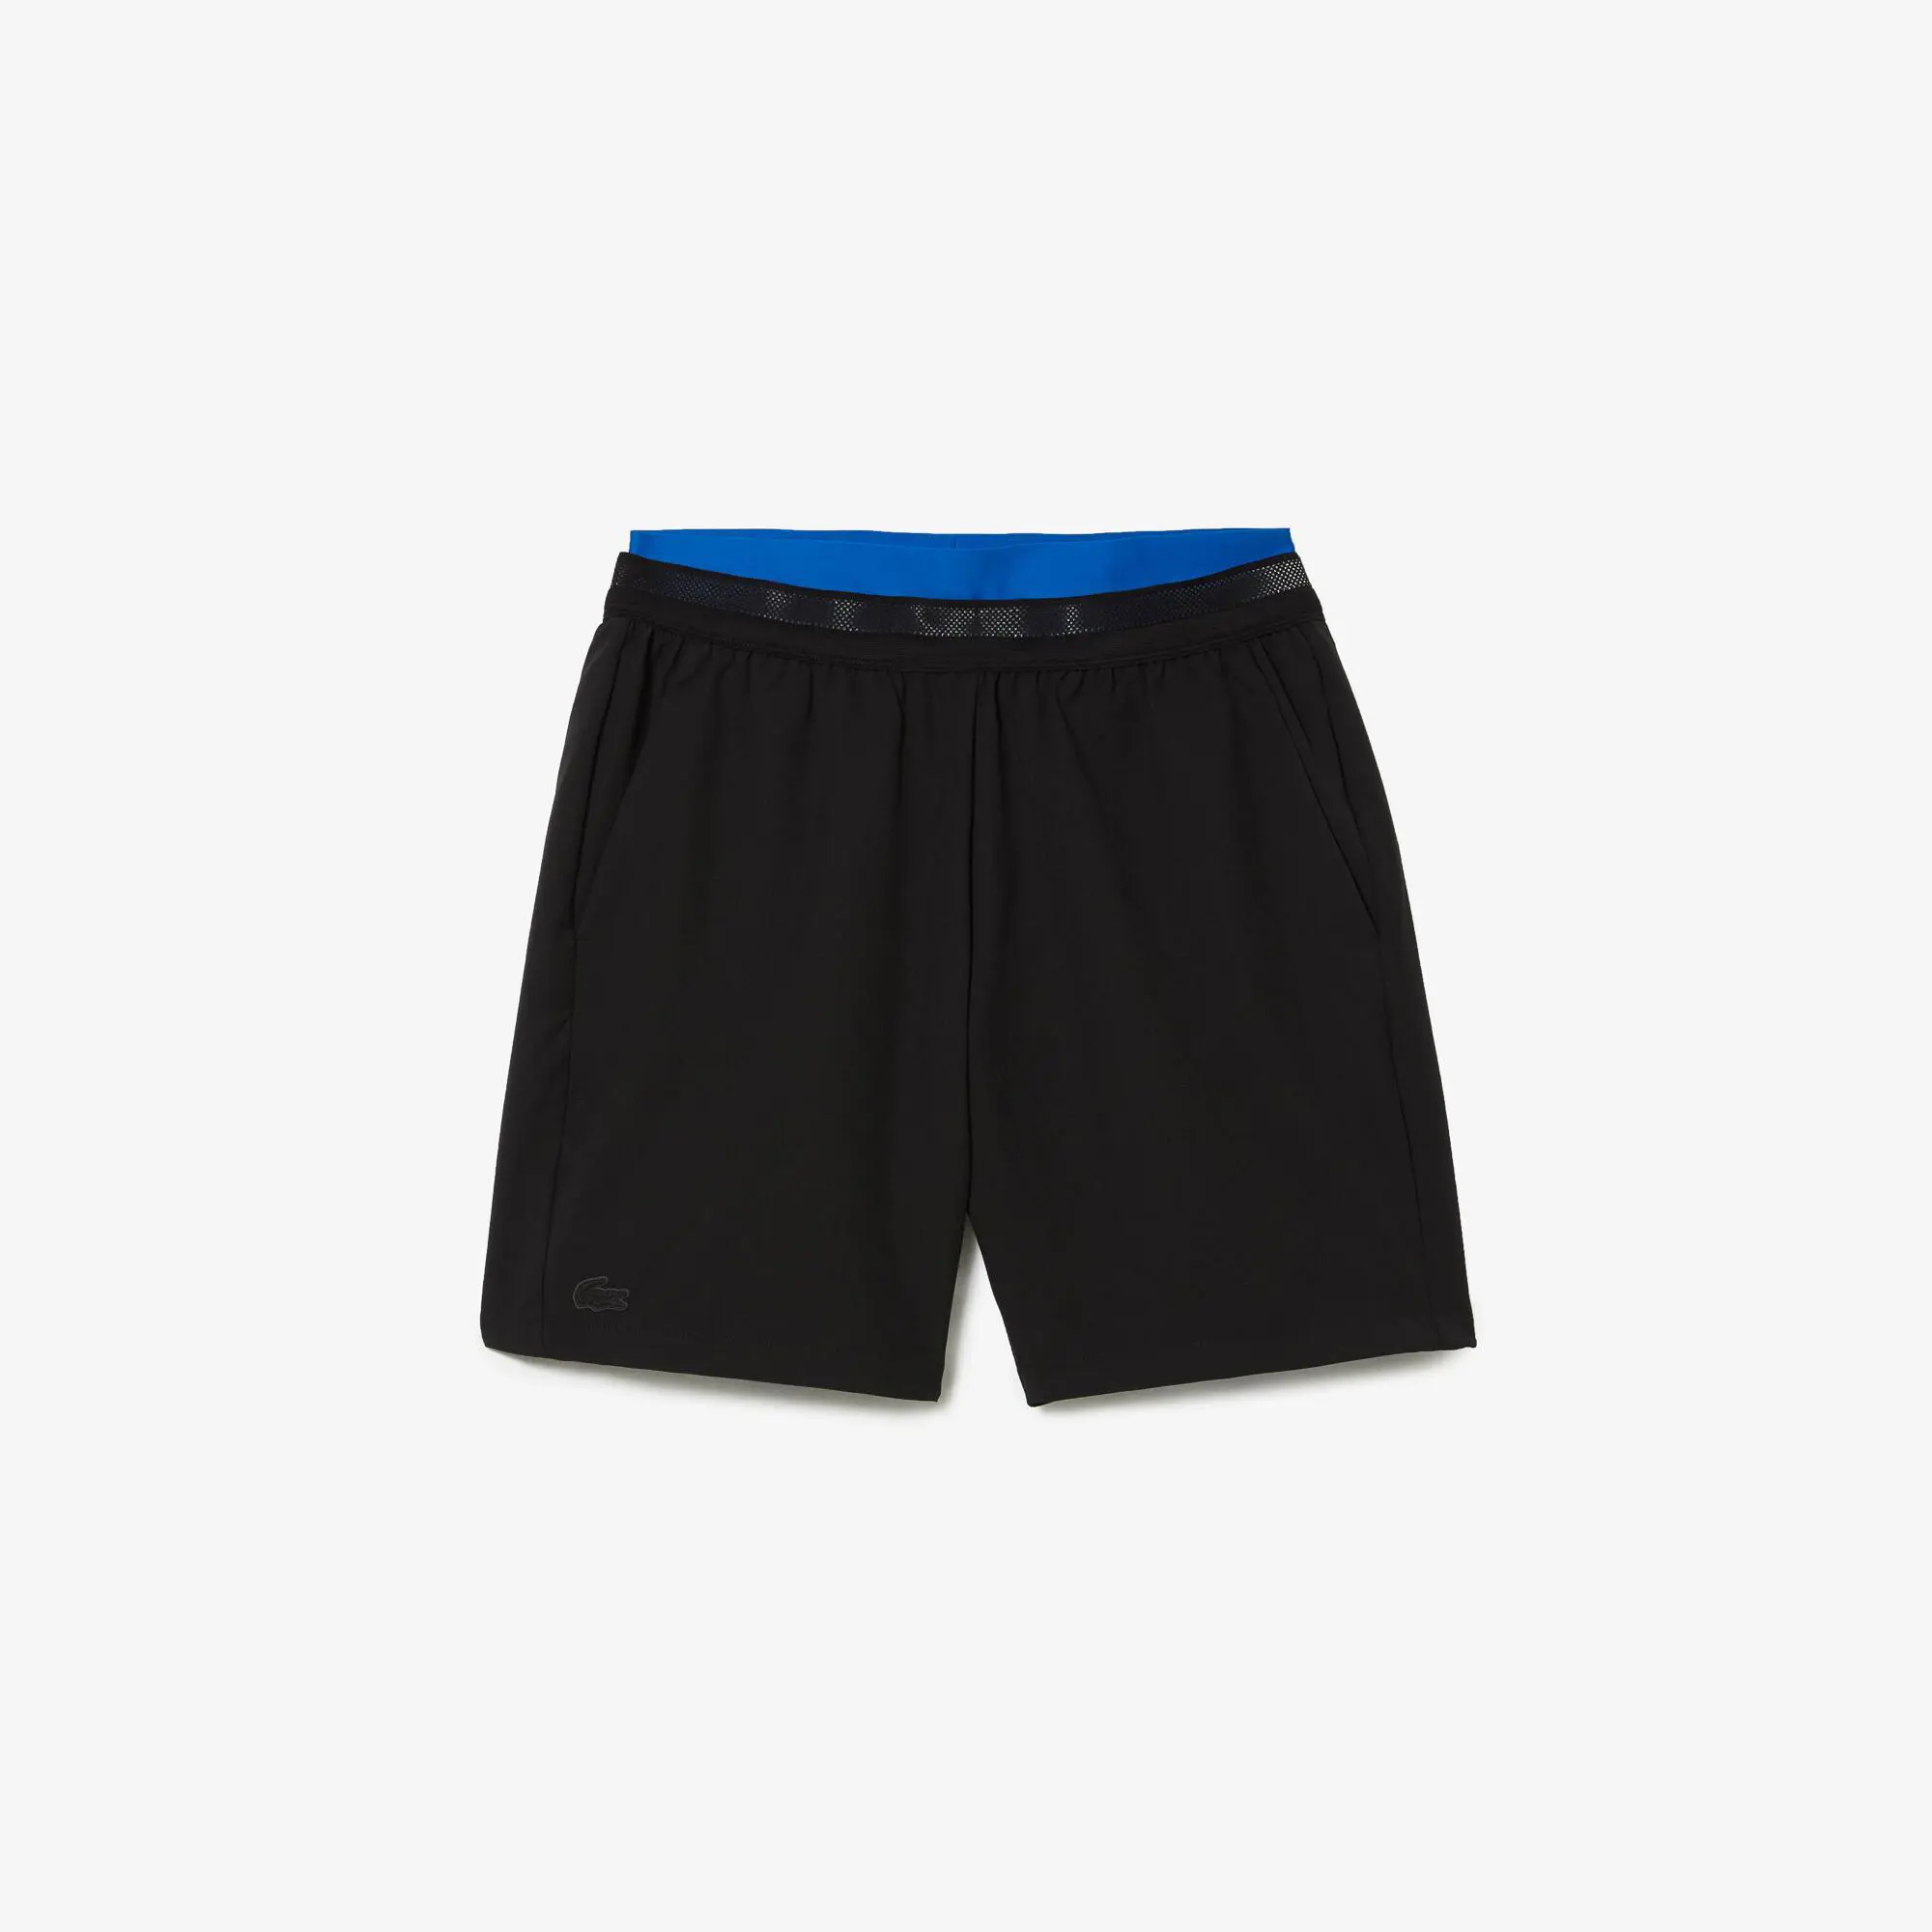 Lacoste Men's SPORT Built-In Liner 3-in-1 Shorts. 2